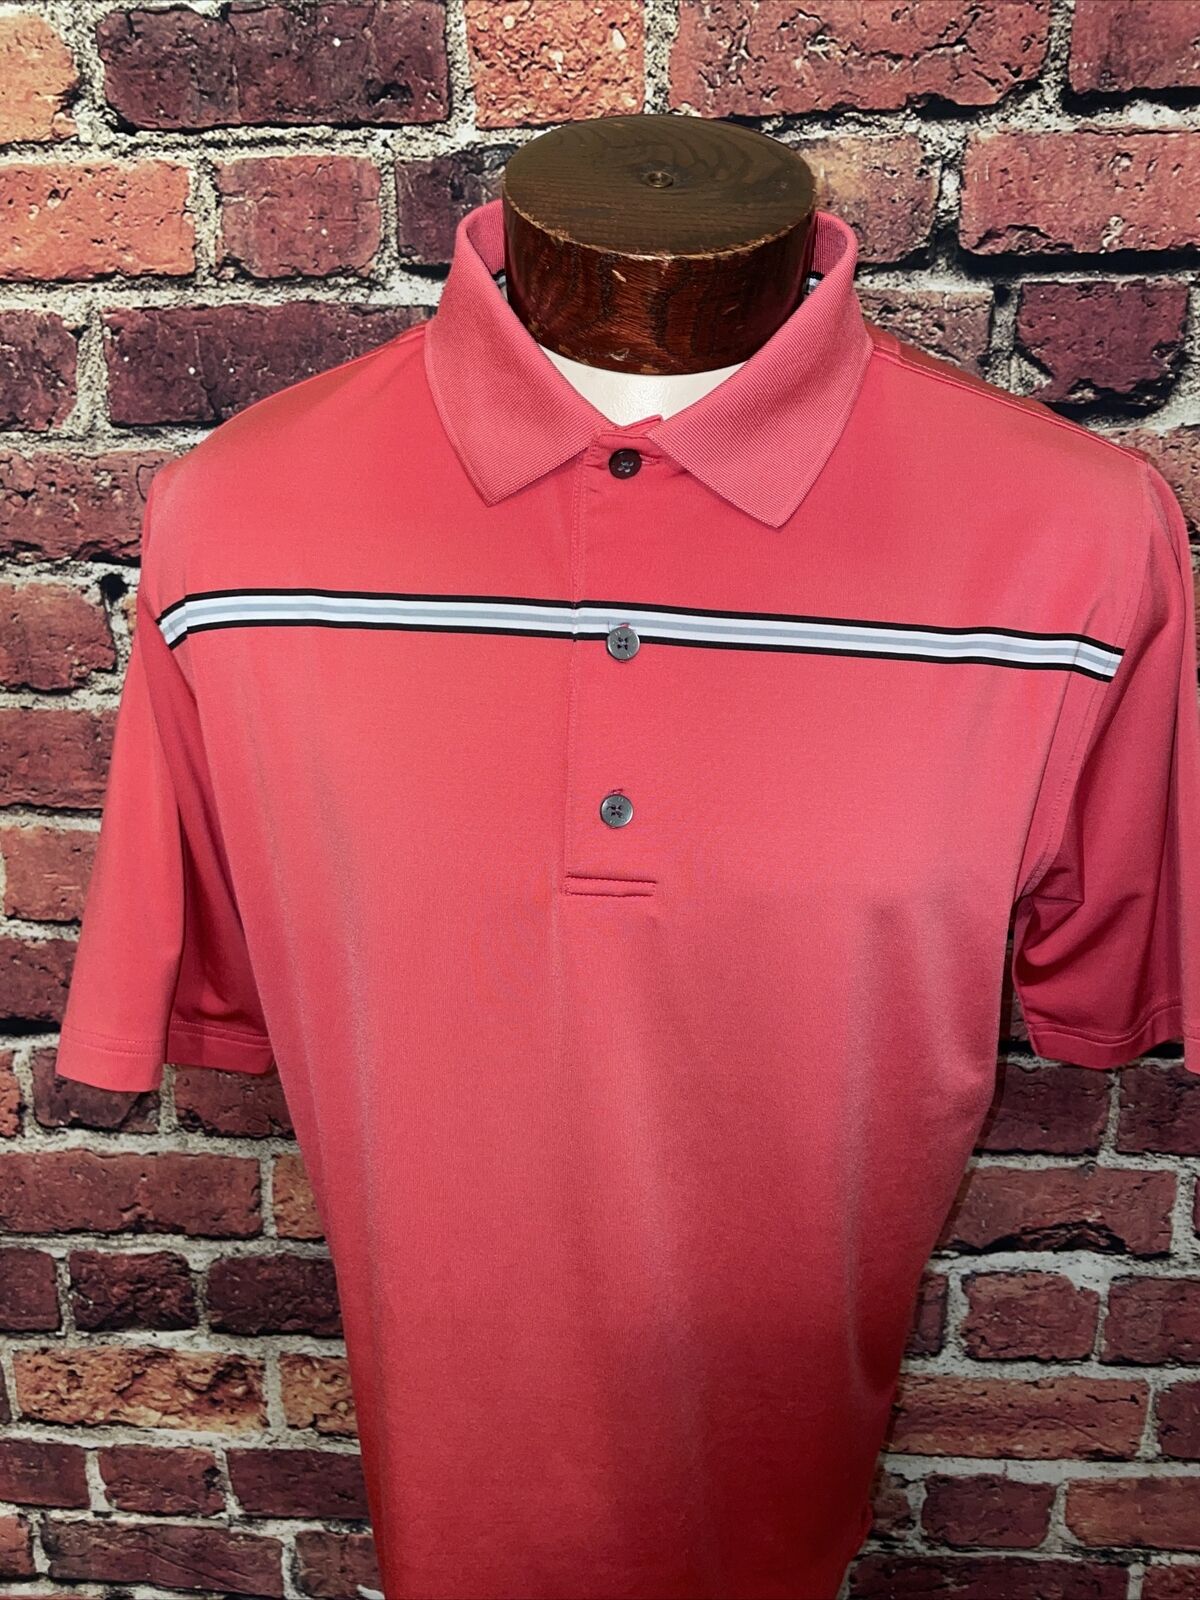 Footjoy Mens Large Pink Gray Striped Short Sleeve Golf Polo Shirt 